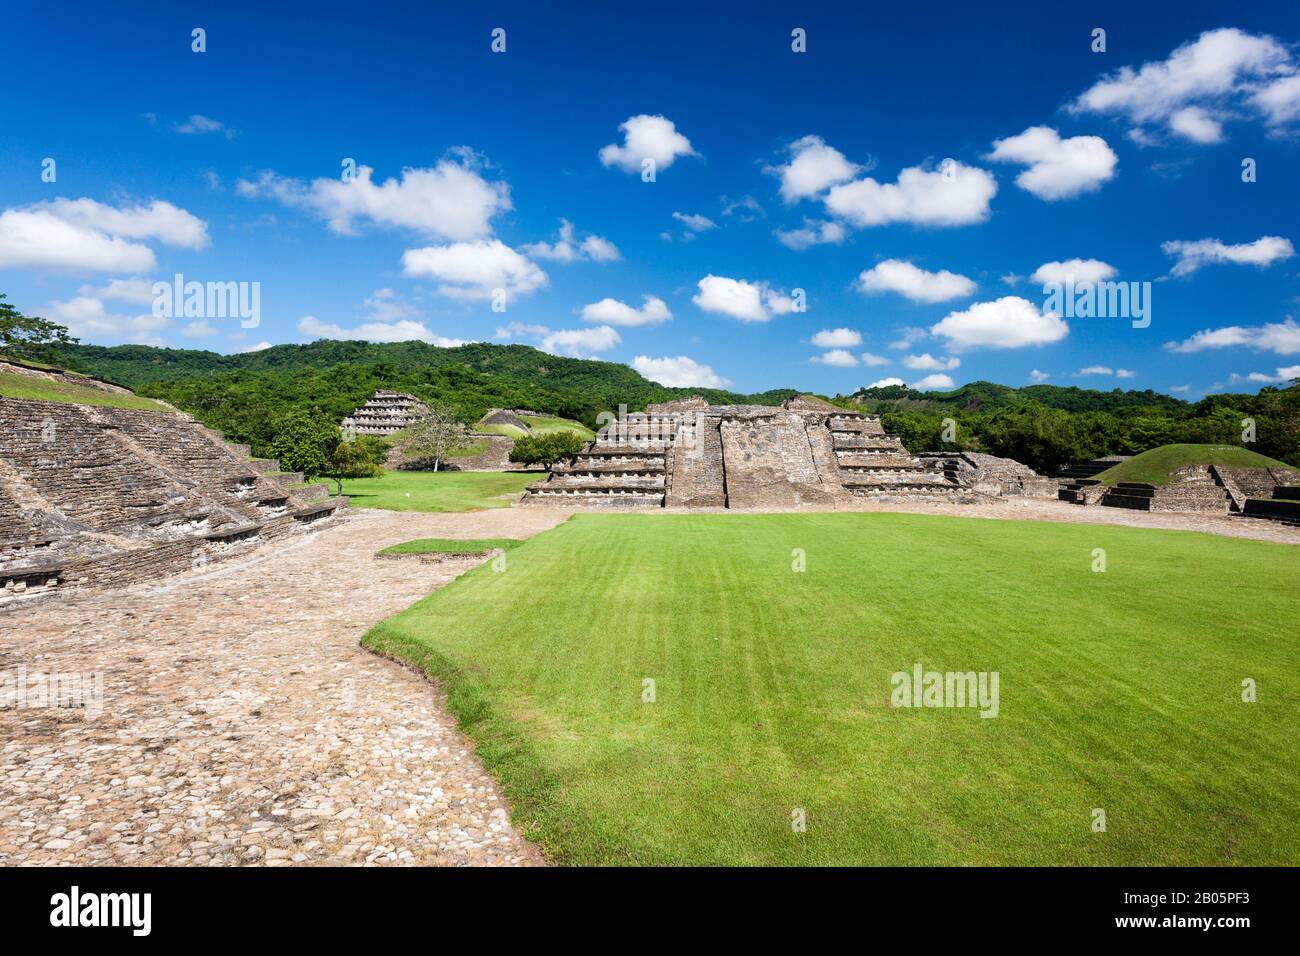 Arroyo group of El Tajin, most important north-east Mesoamerica archaeological site, Mayan Ruins, Veracruz, Mexico, Central America Stock Photo